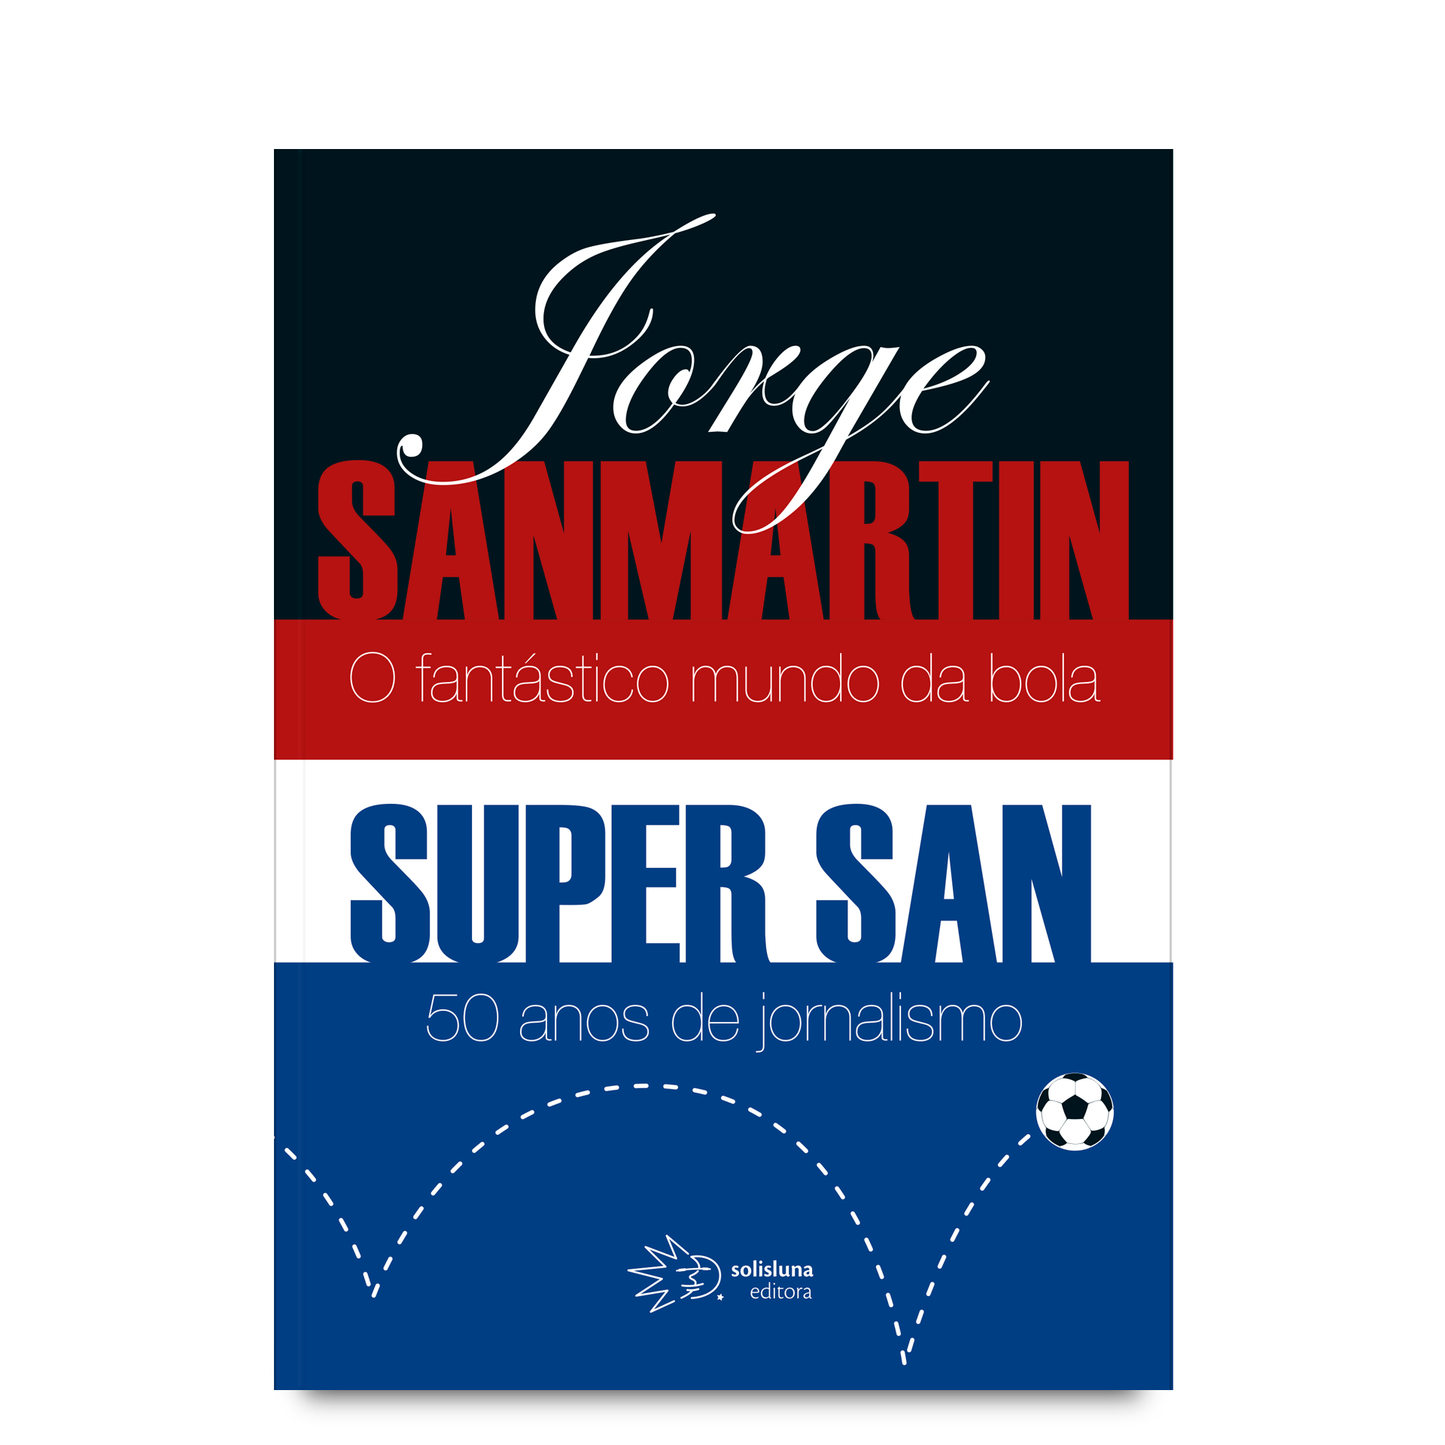 Jorge Sanmartin – O Fantástico Mundo da Bola